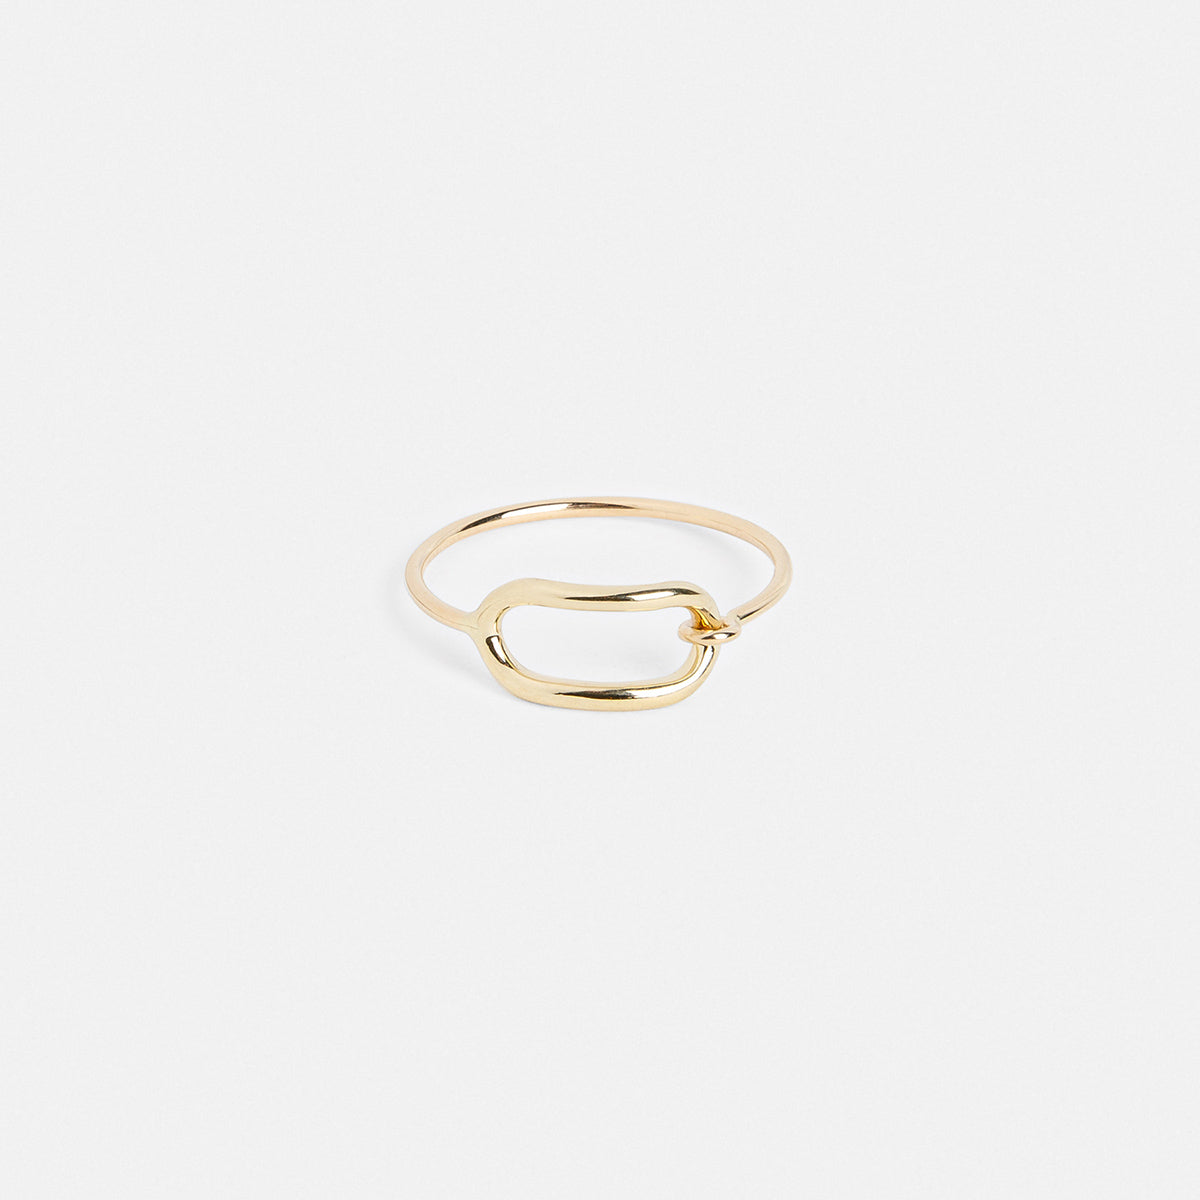 Vel Delicate Ring in 14k Gold by SHW Fine Jewelry